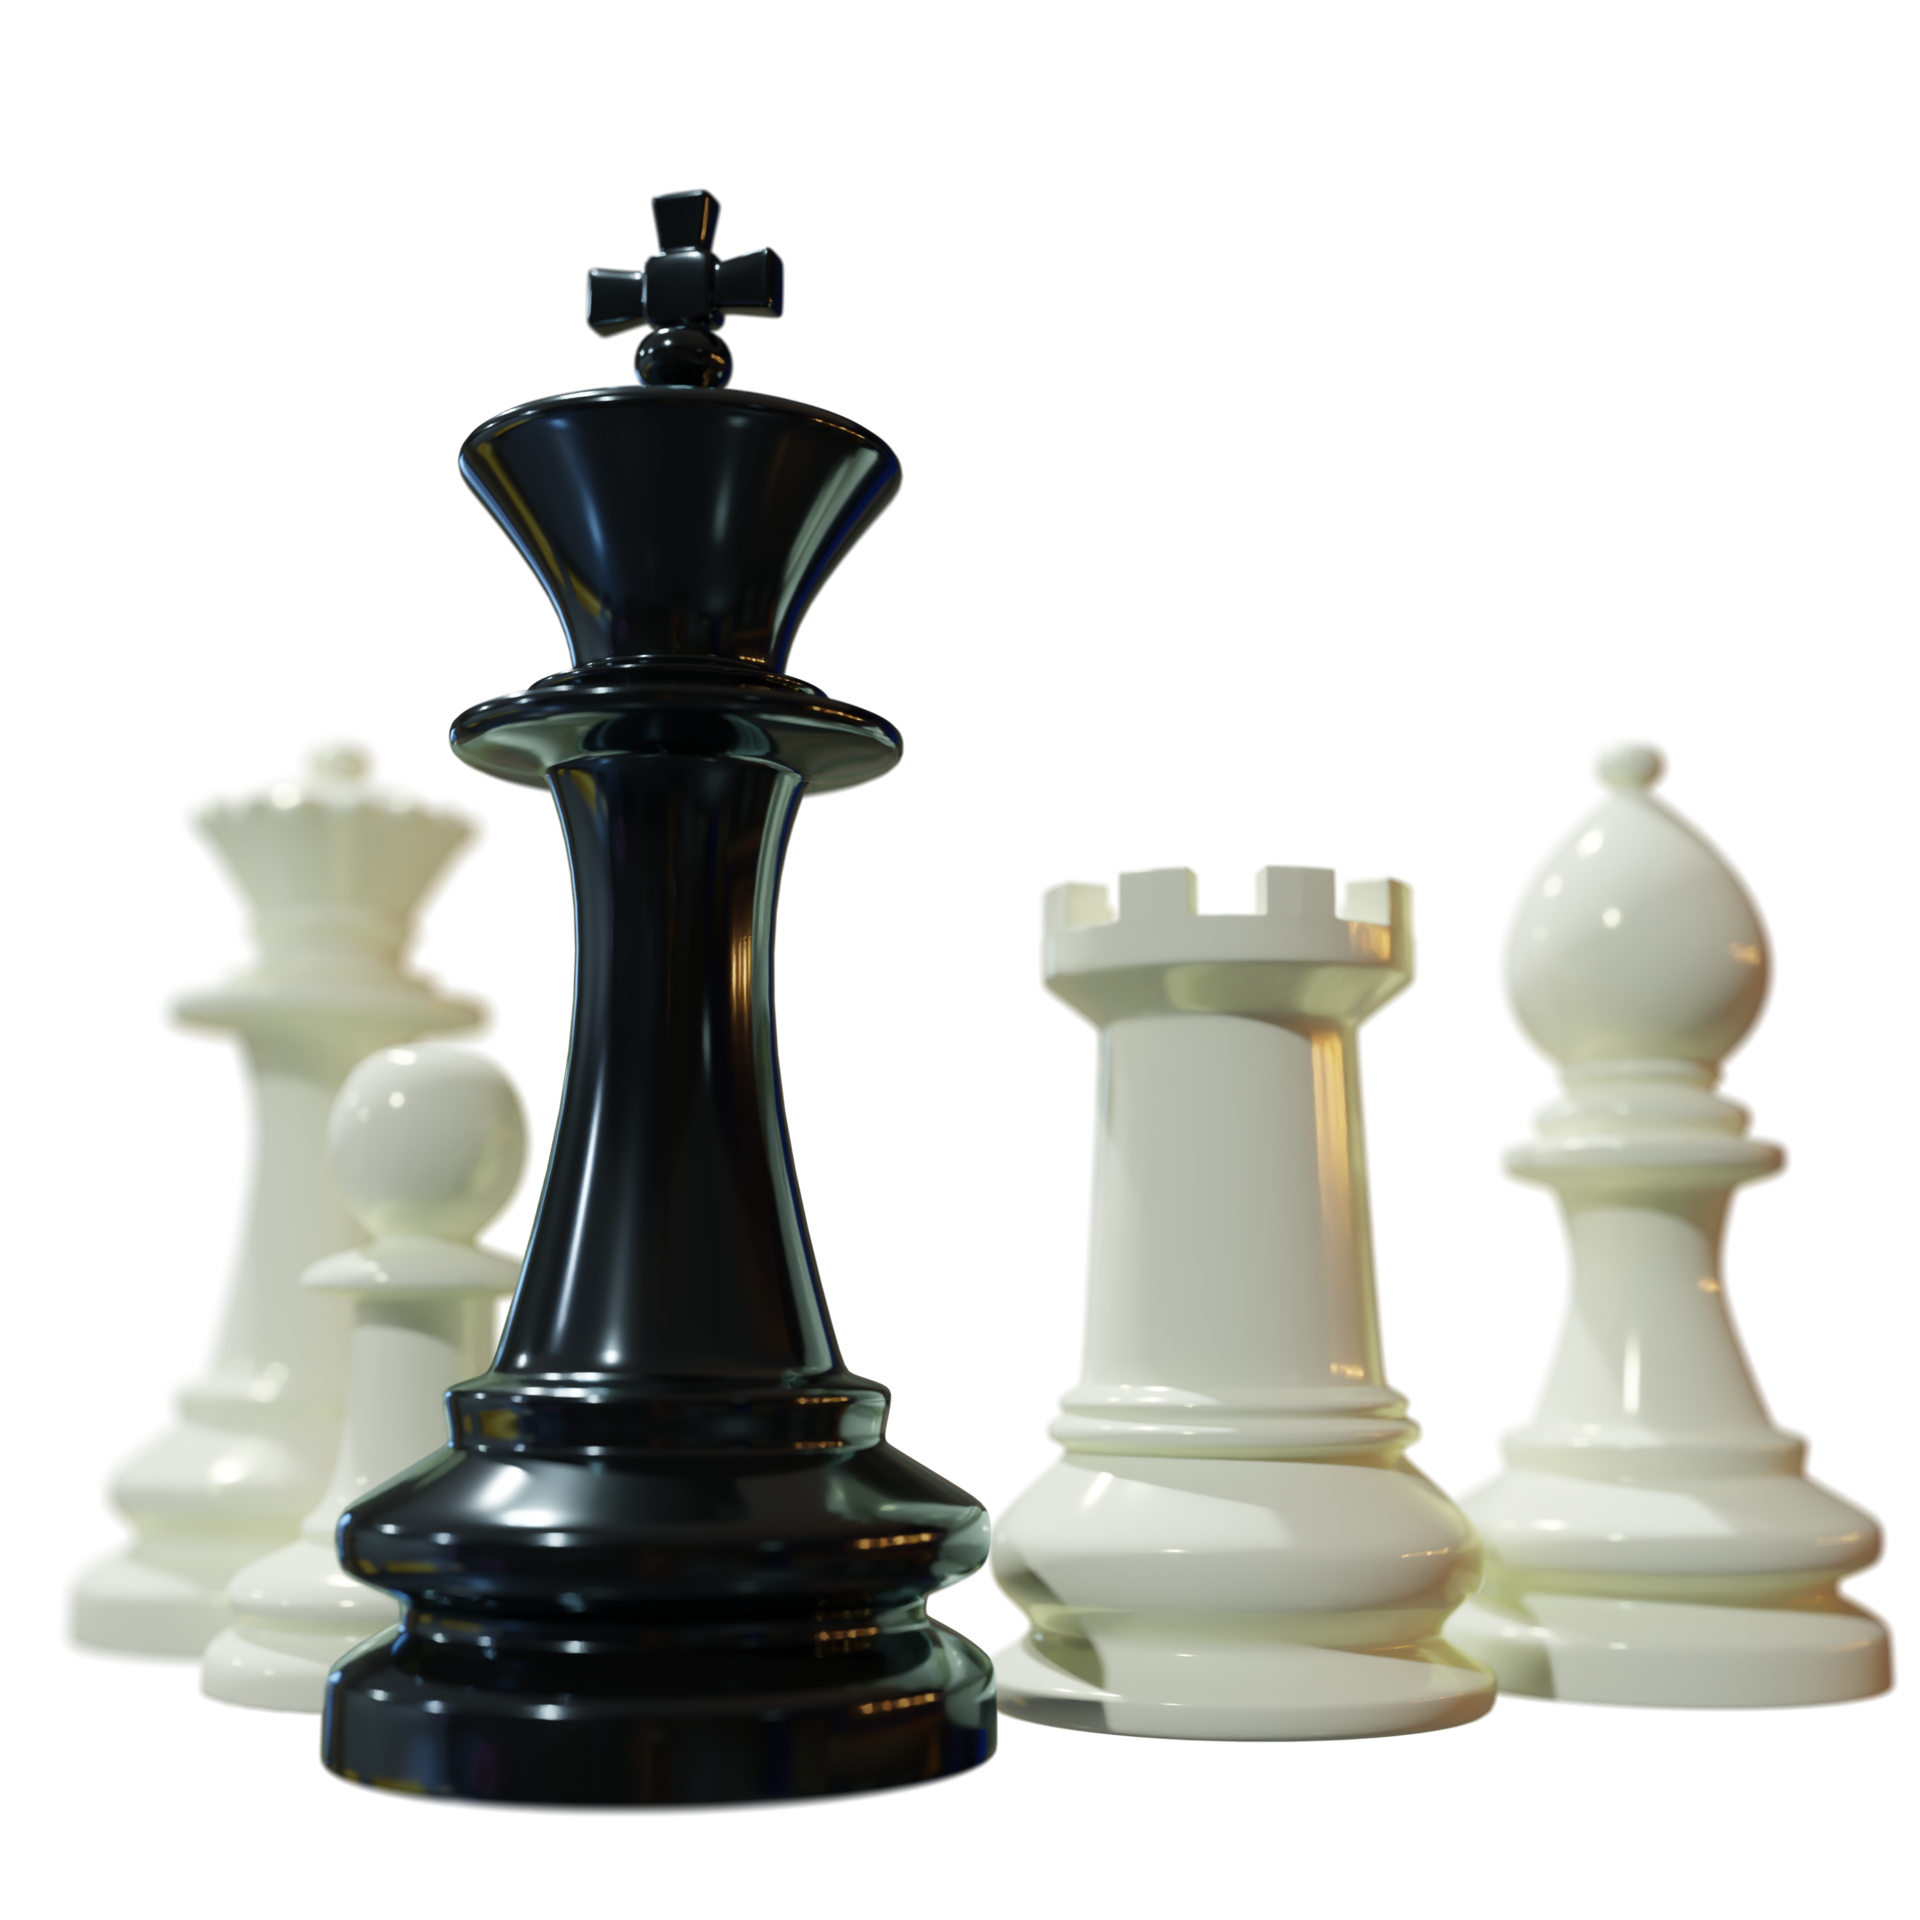 xadrez borda jogos isolado 3d render 21013967 PNG